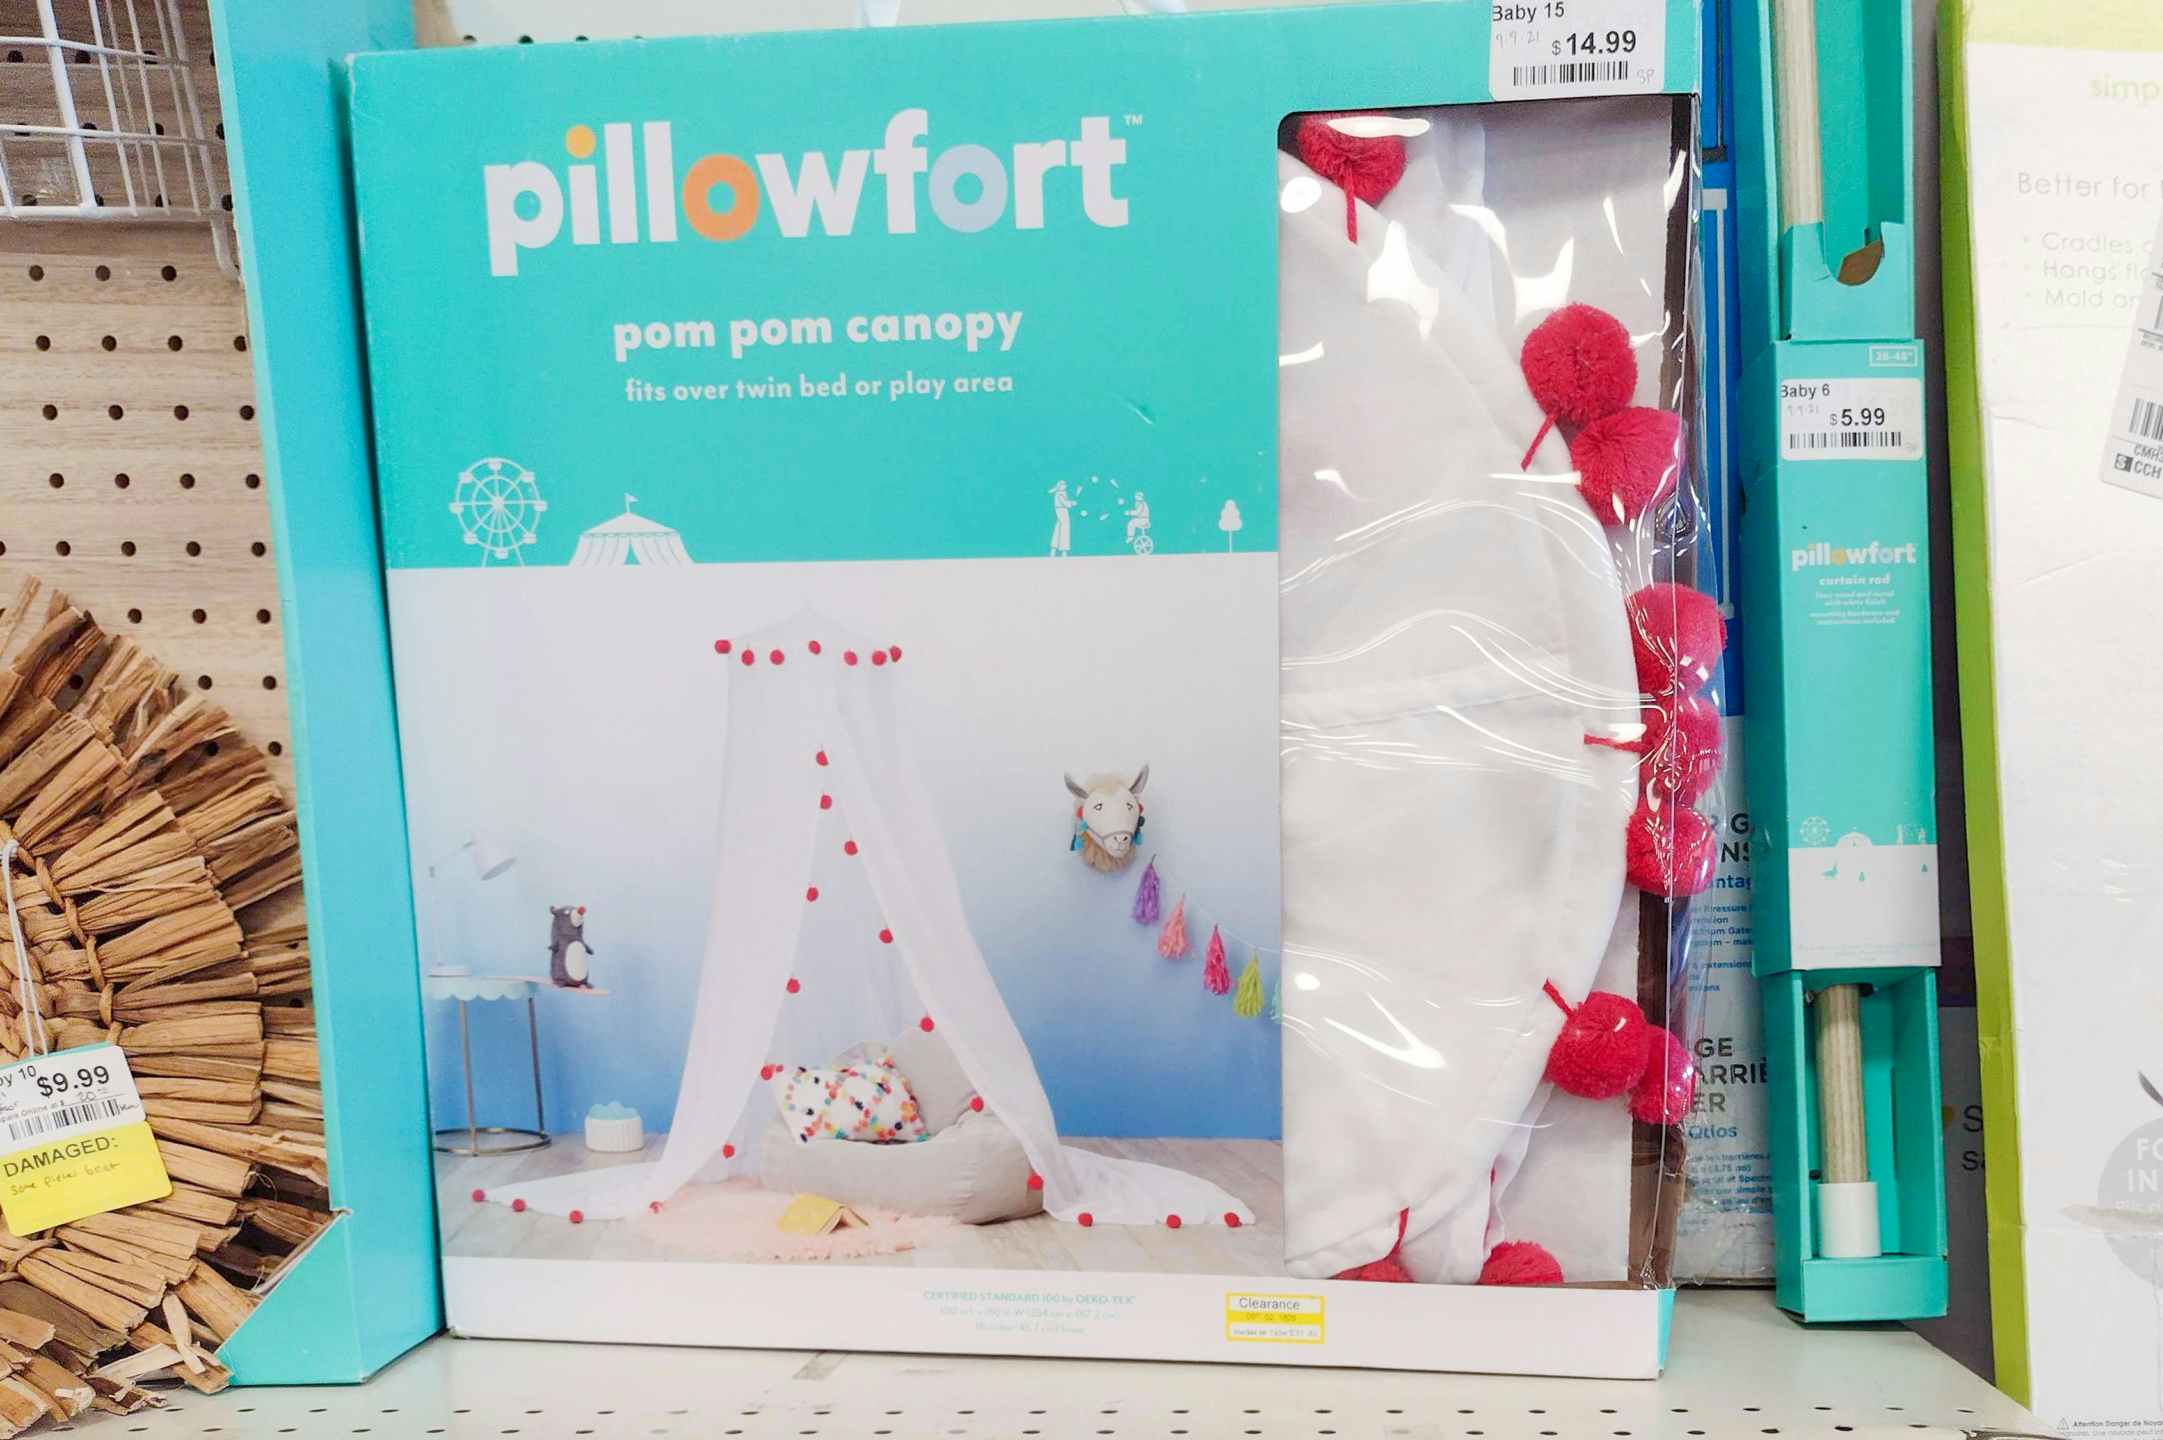 A Pillowfort pom pom canopy box sitting on a shelf.